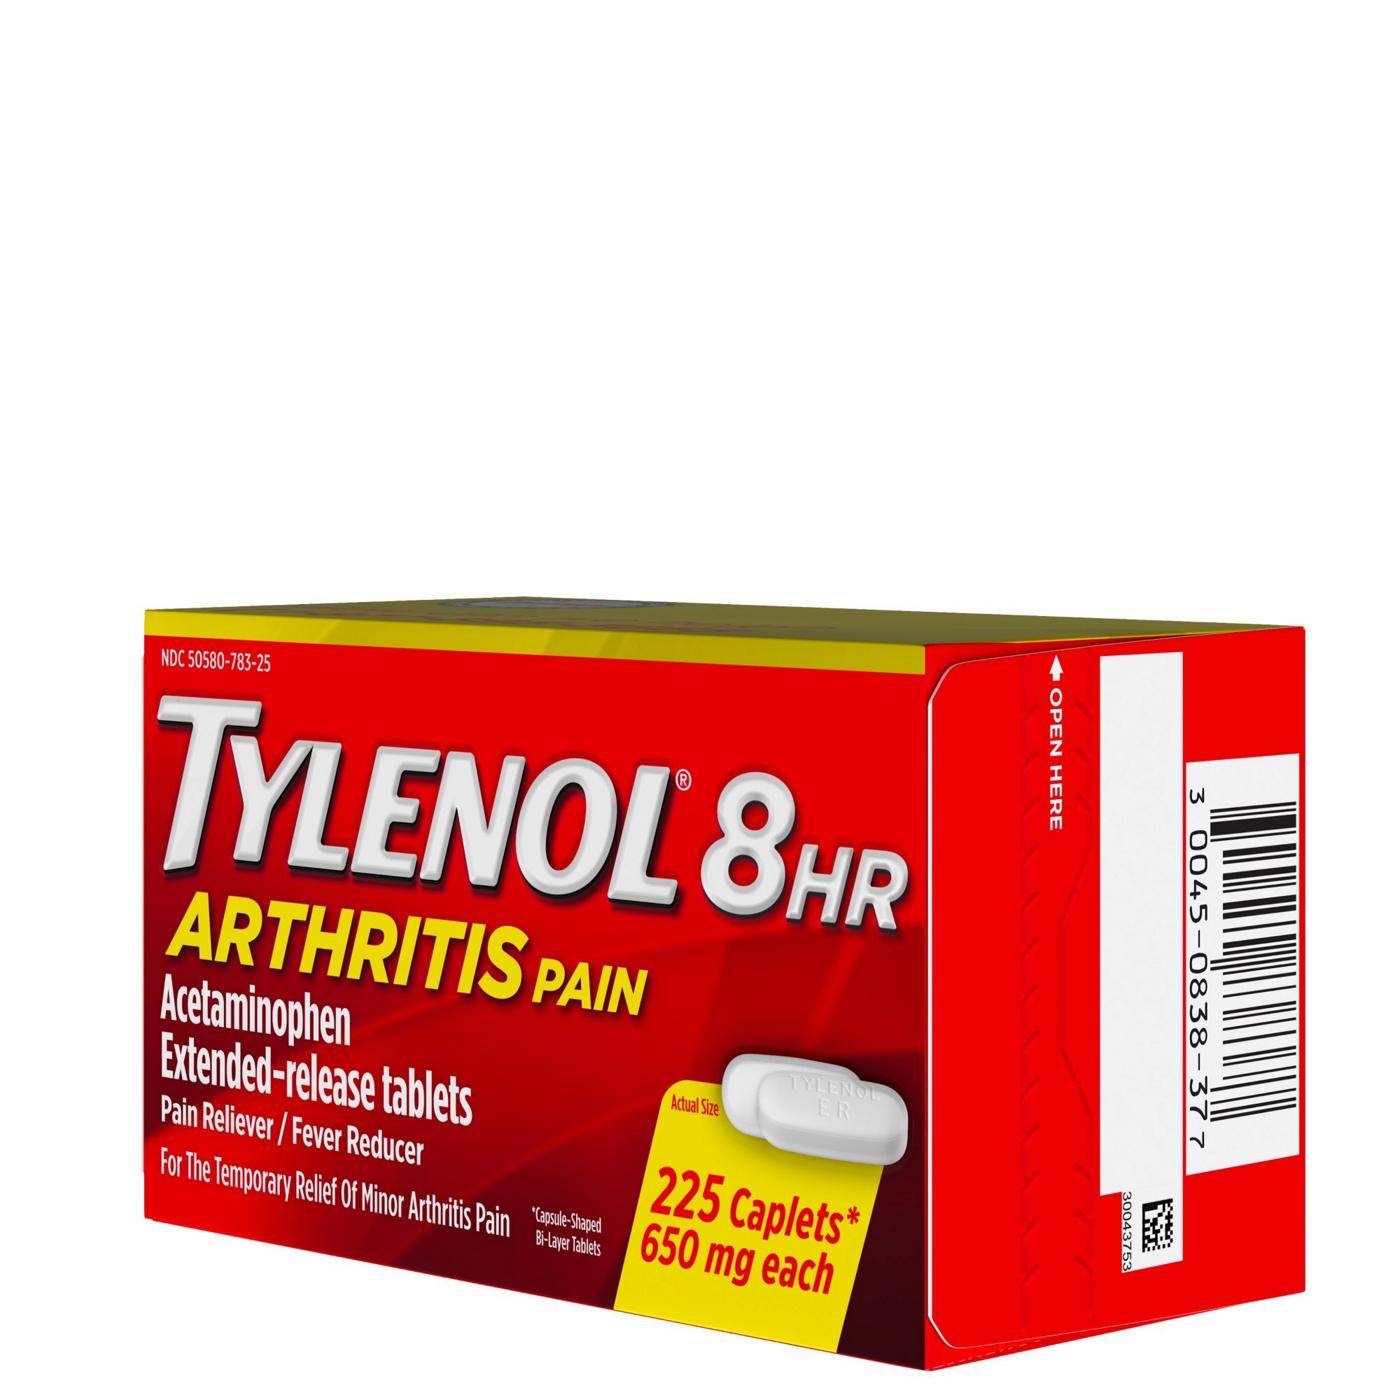 Tylenol 8 HR Arthritis Pain Extended Release Caplets - 650 Mg; image 3 of 6